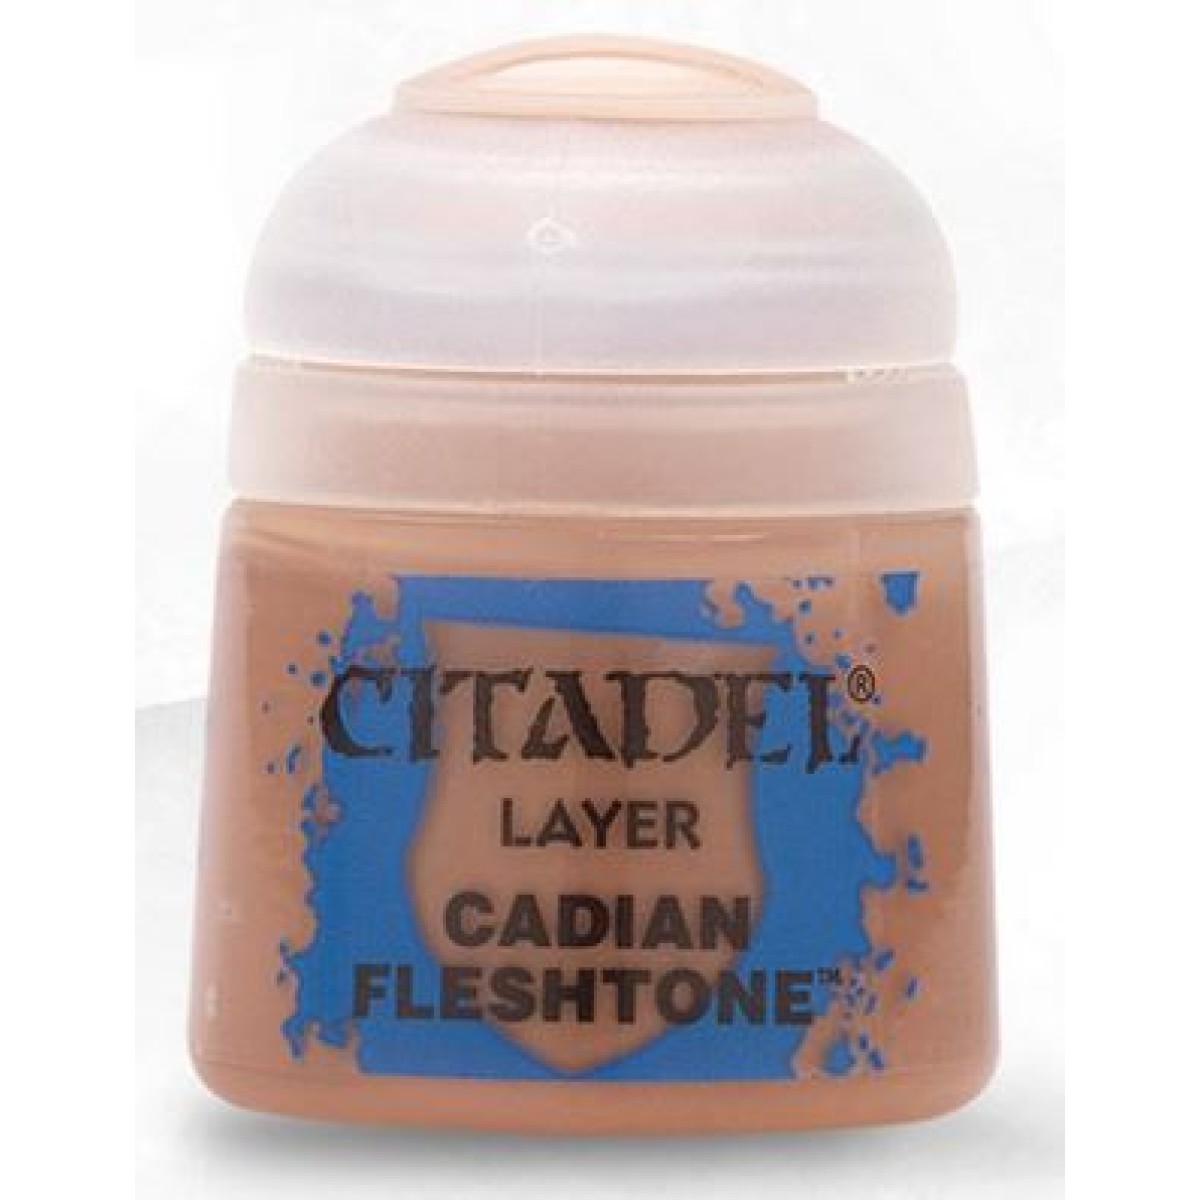 Citadel Layer Paint - Cadian Fleshtone